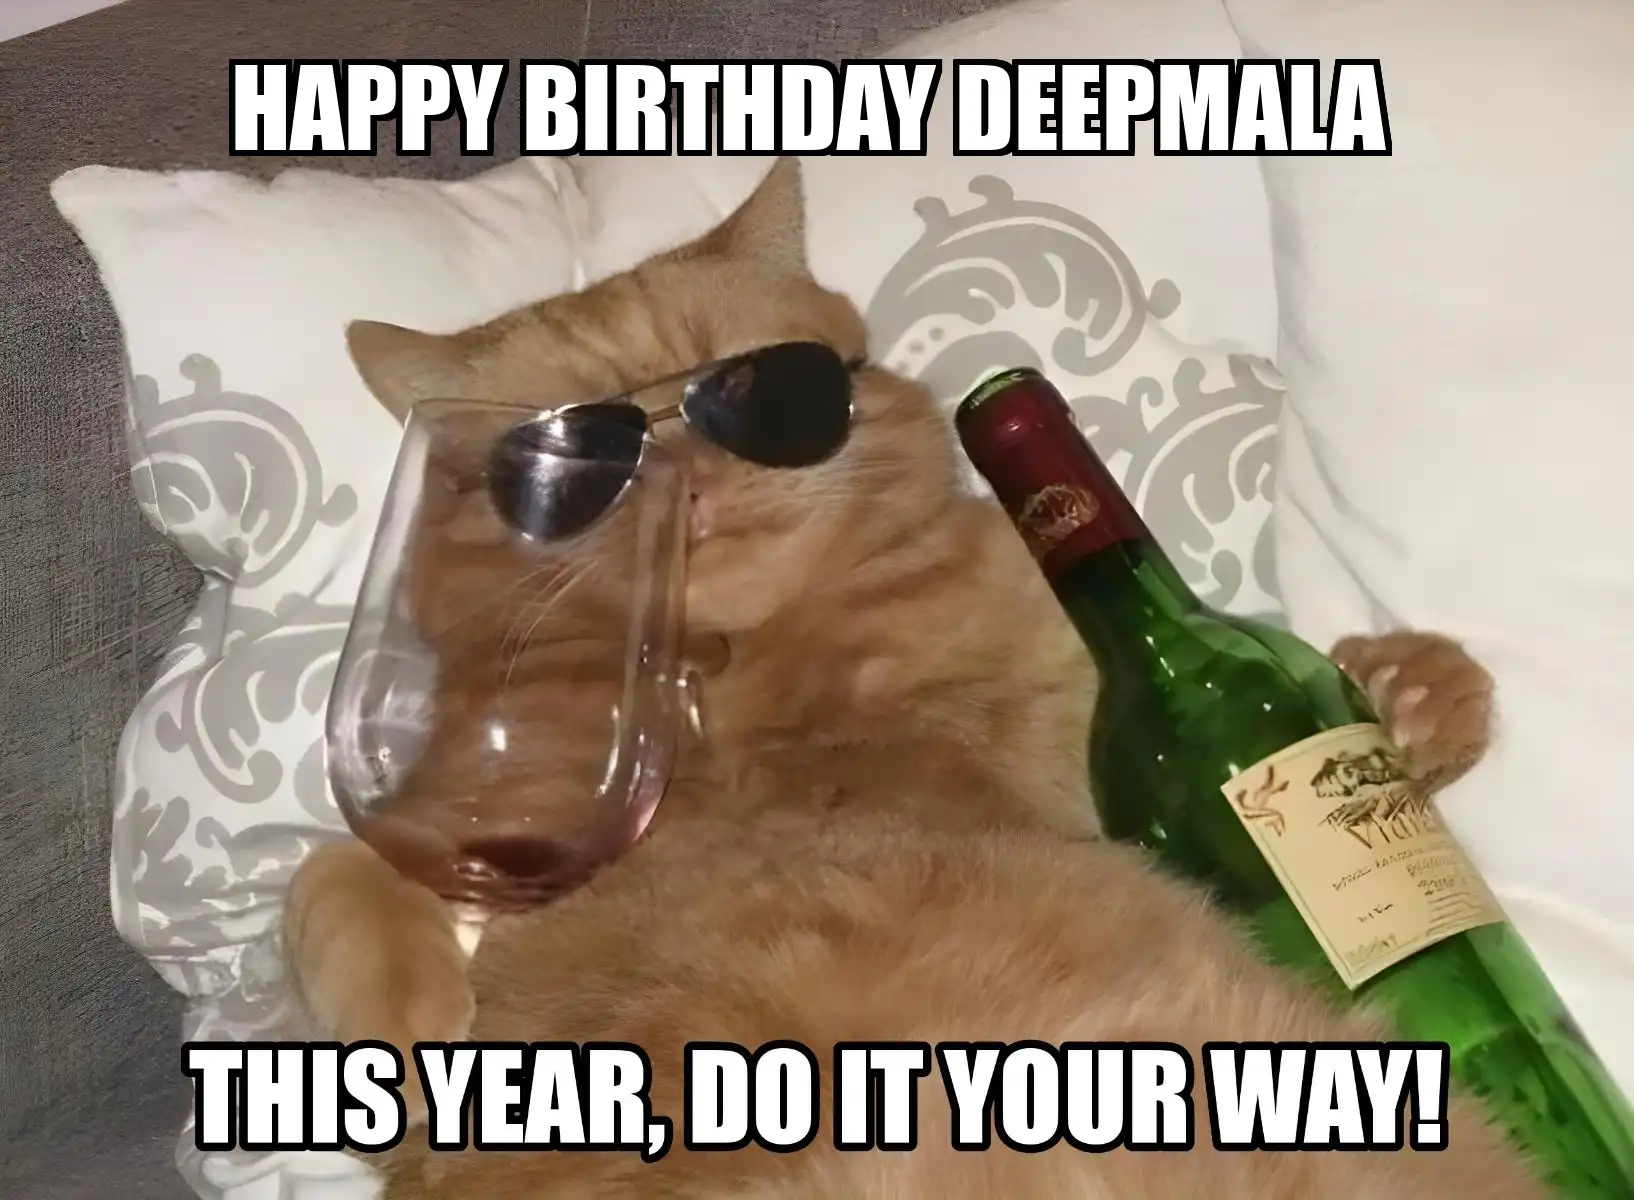 Happy Birthday Deepmala This Year Do It Your Way Meme